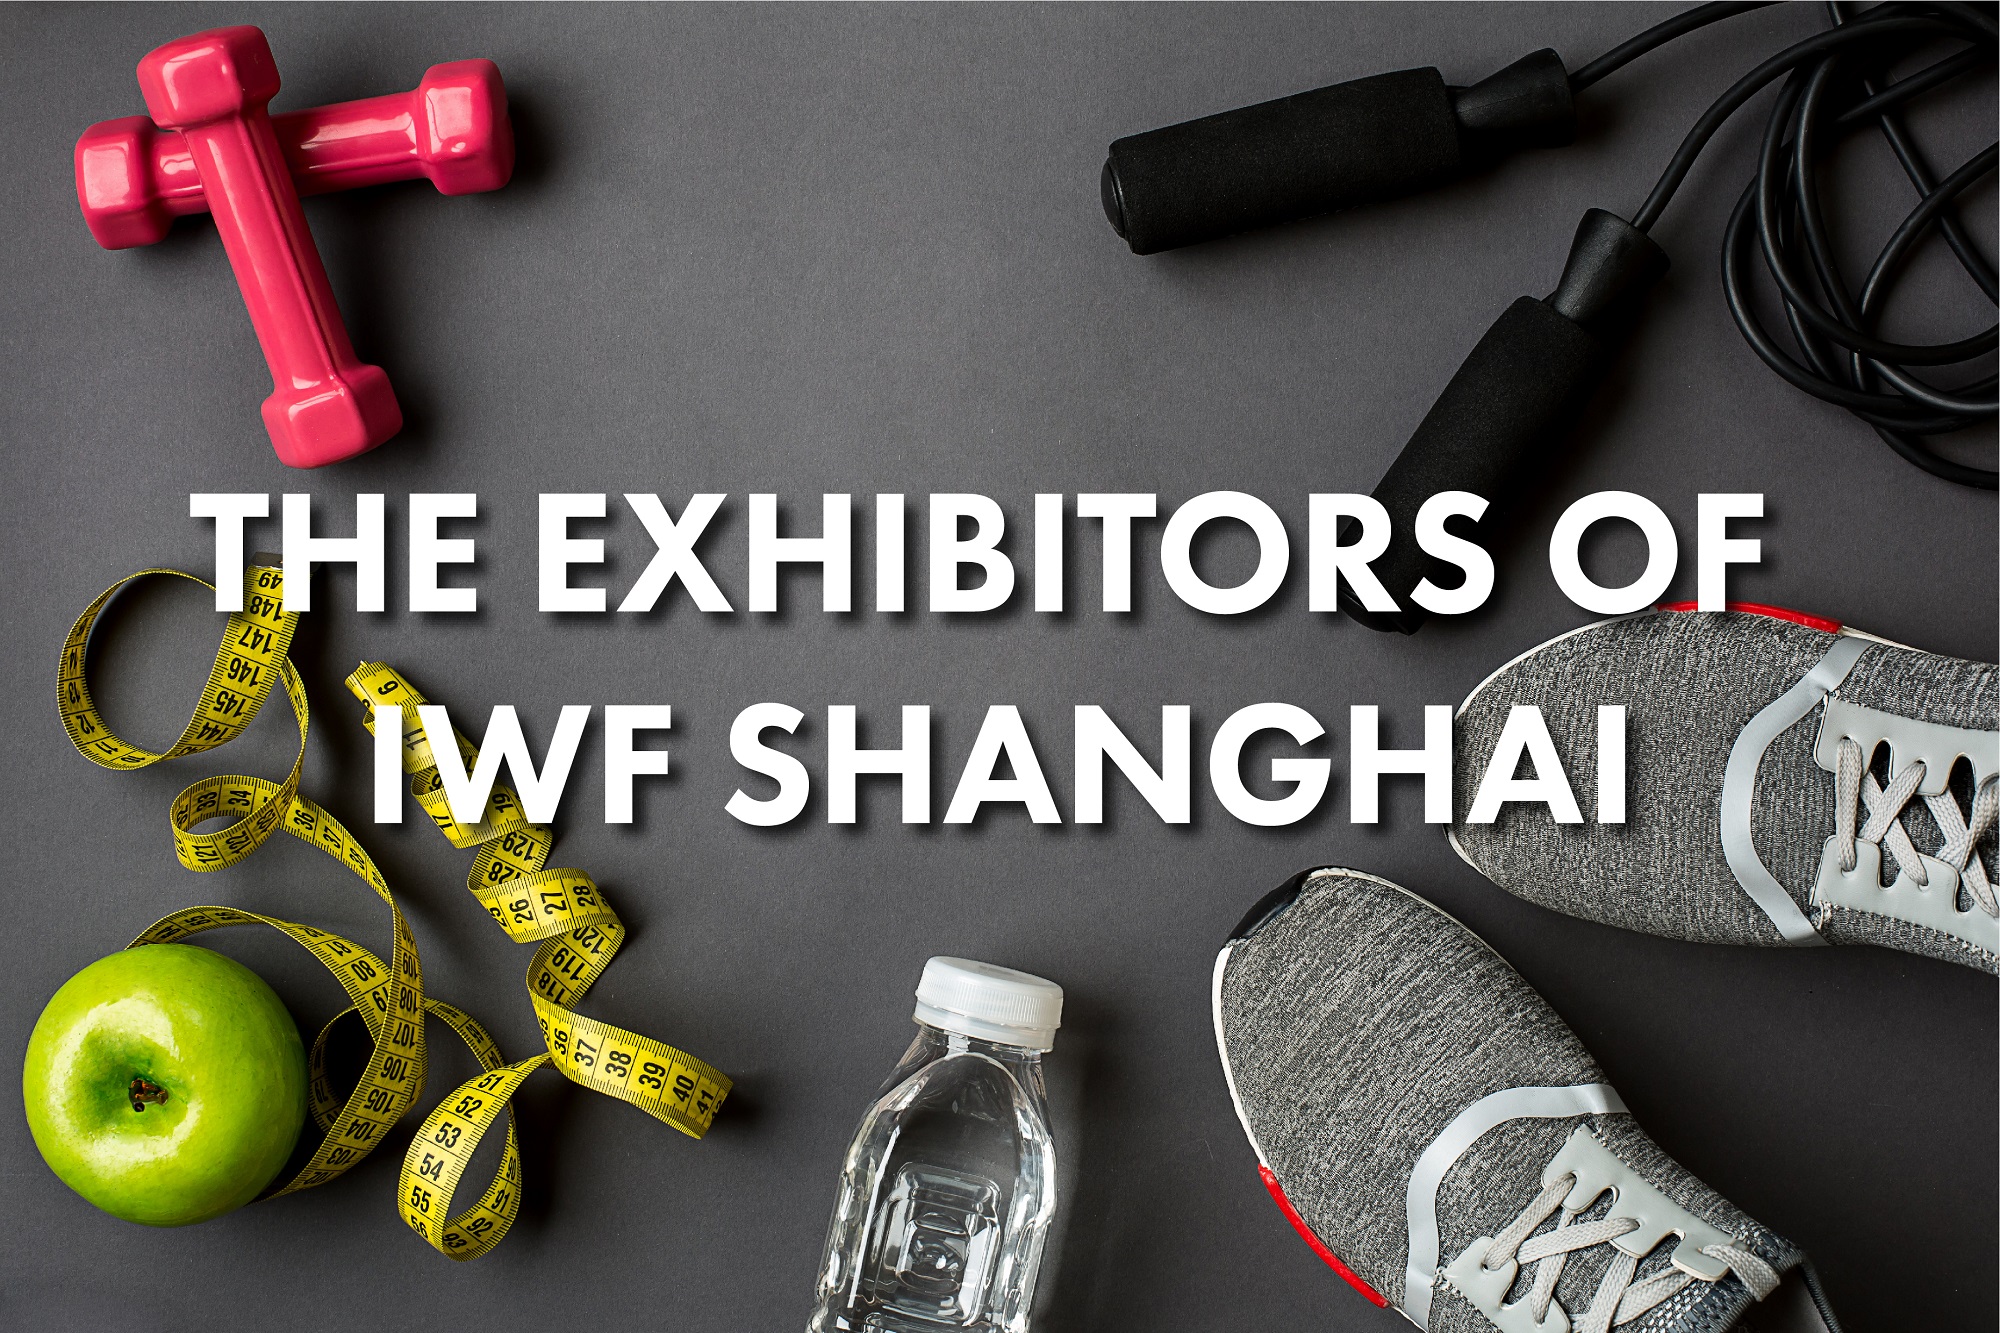 The Exhibitors of IWF SHANGHAI